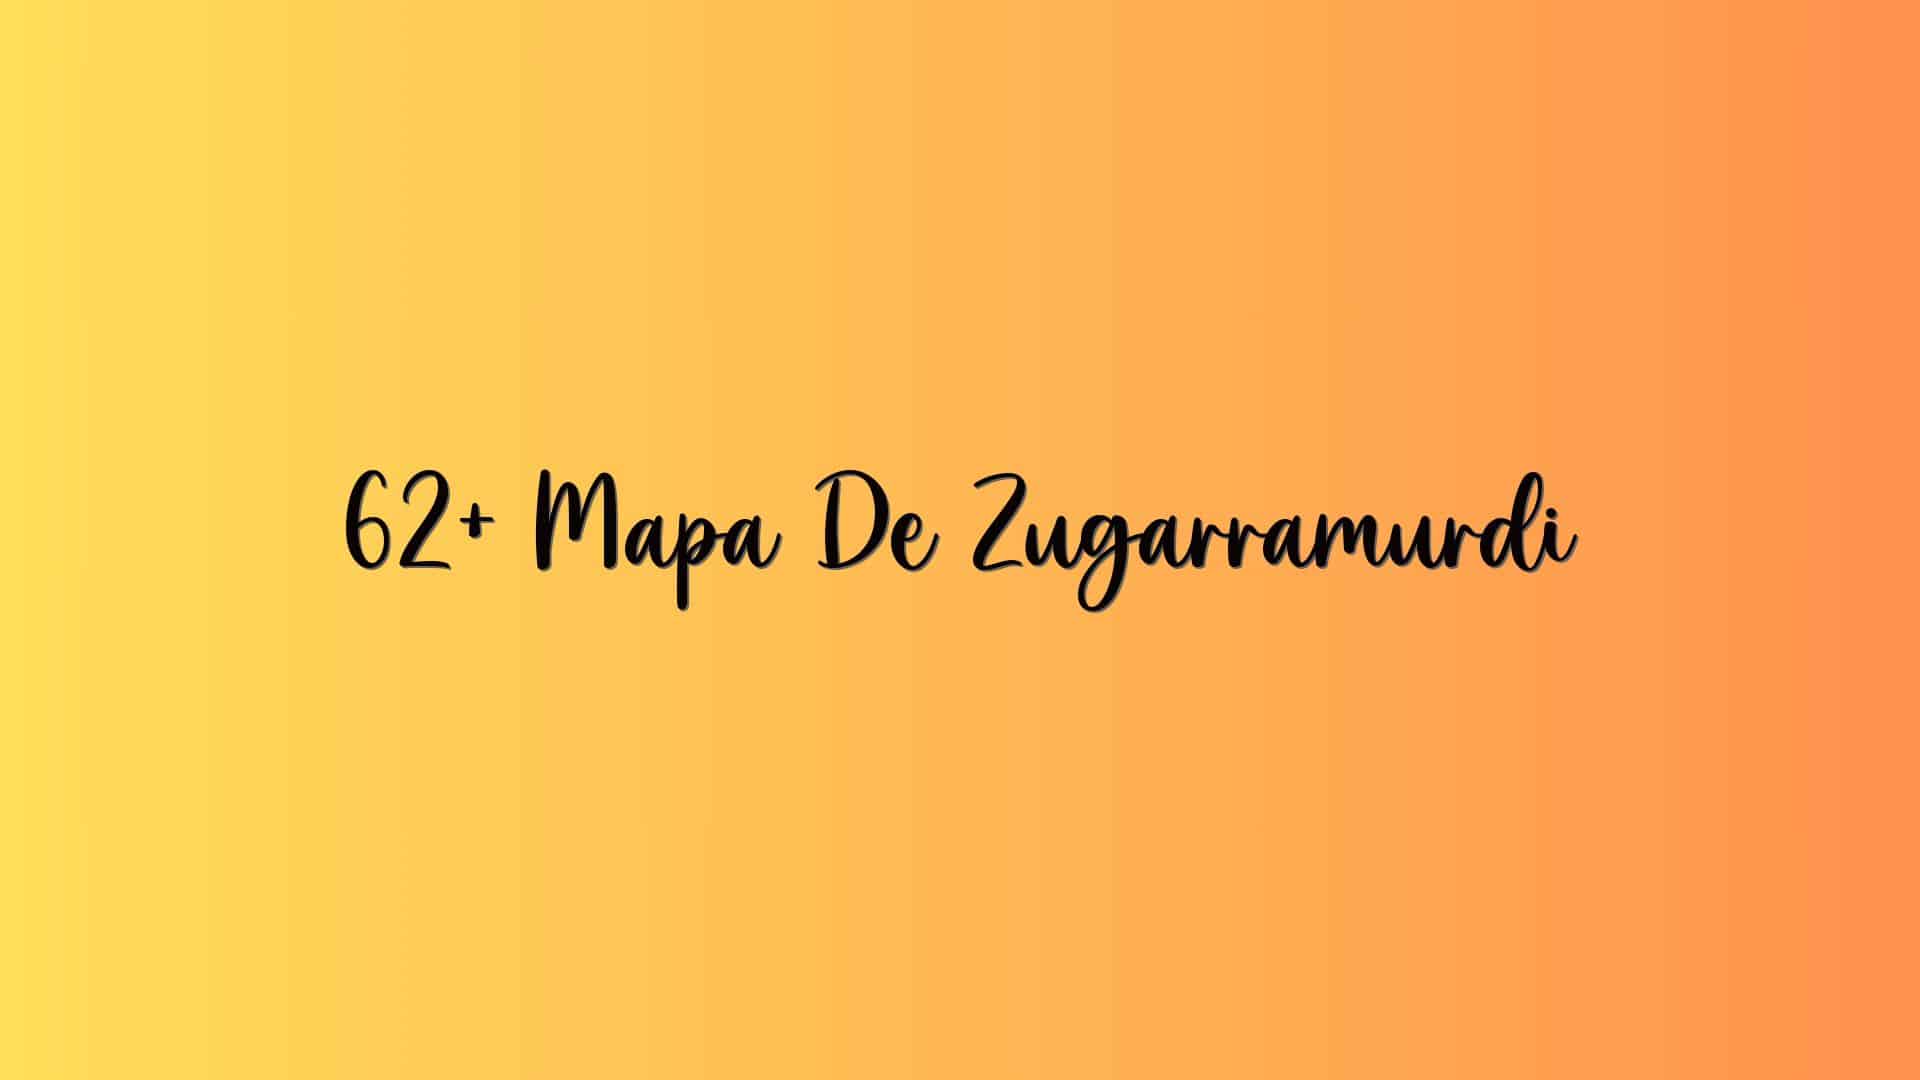 62+ Mapa De Zugarramurdi